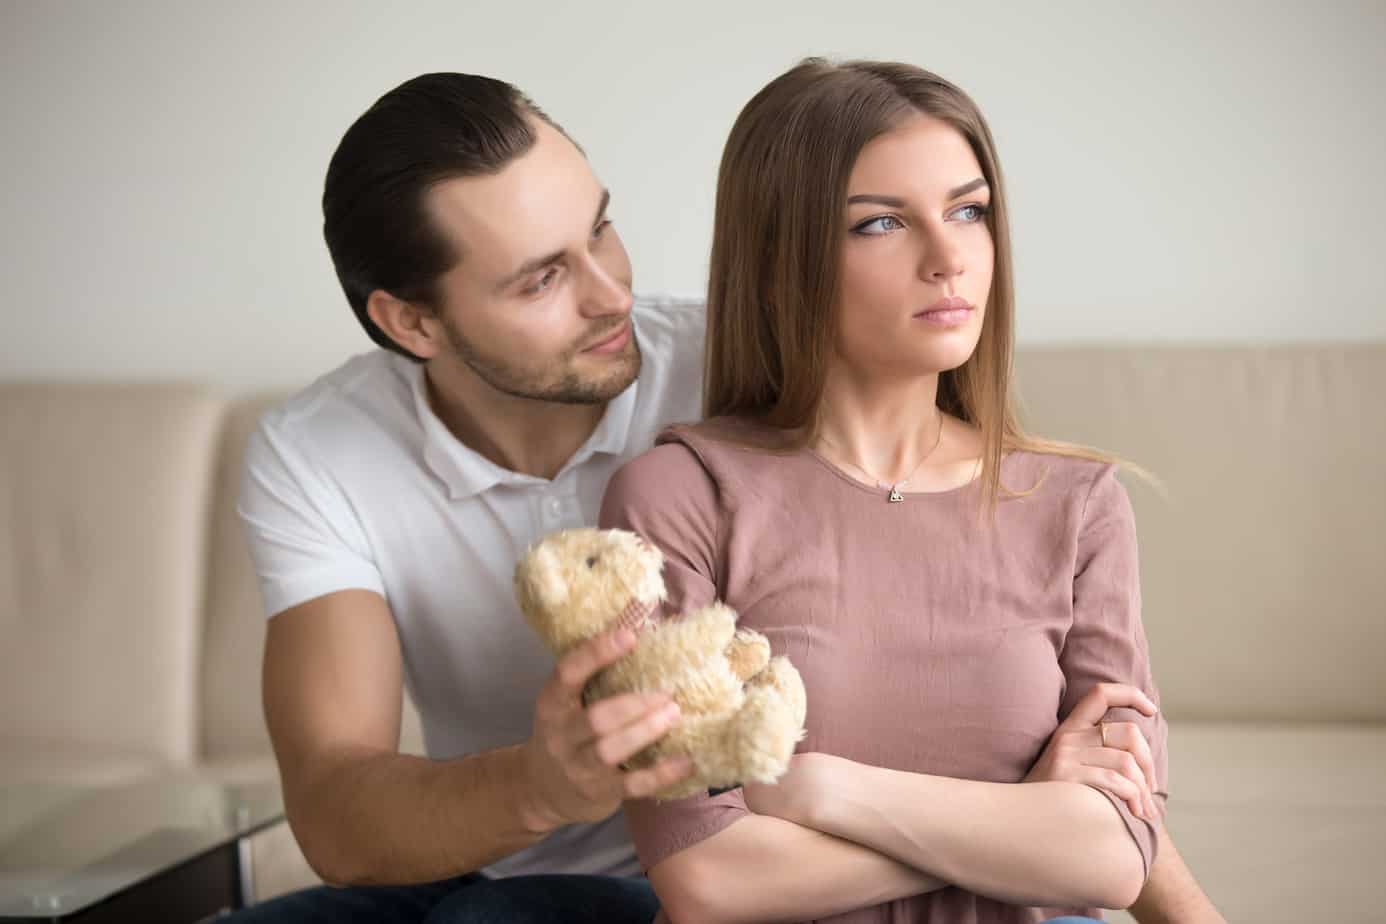 A man holding a teddy bear next to a woman